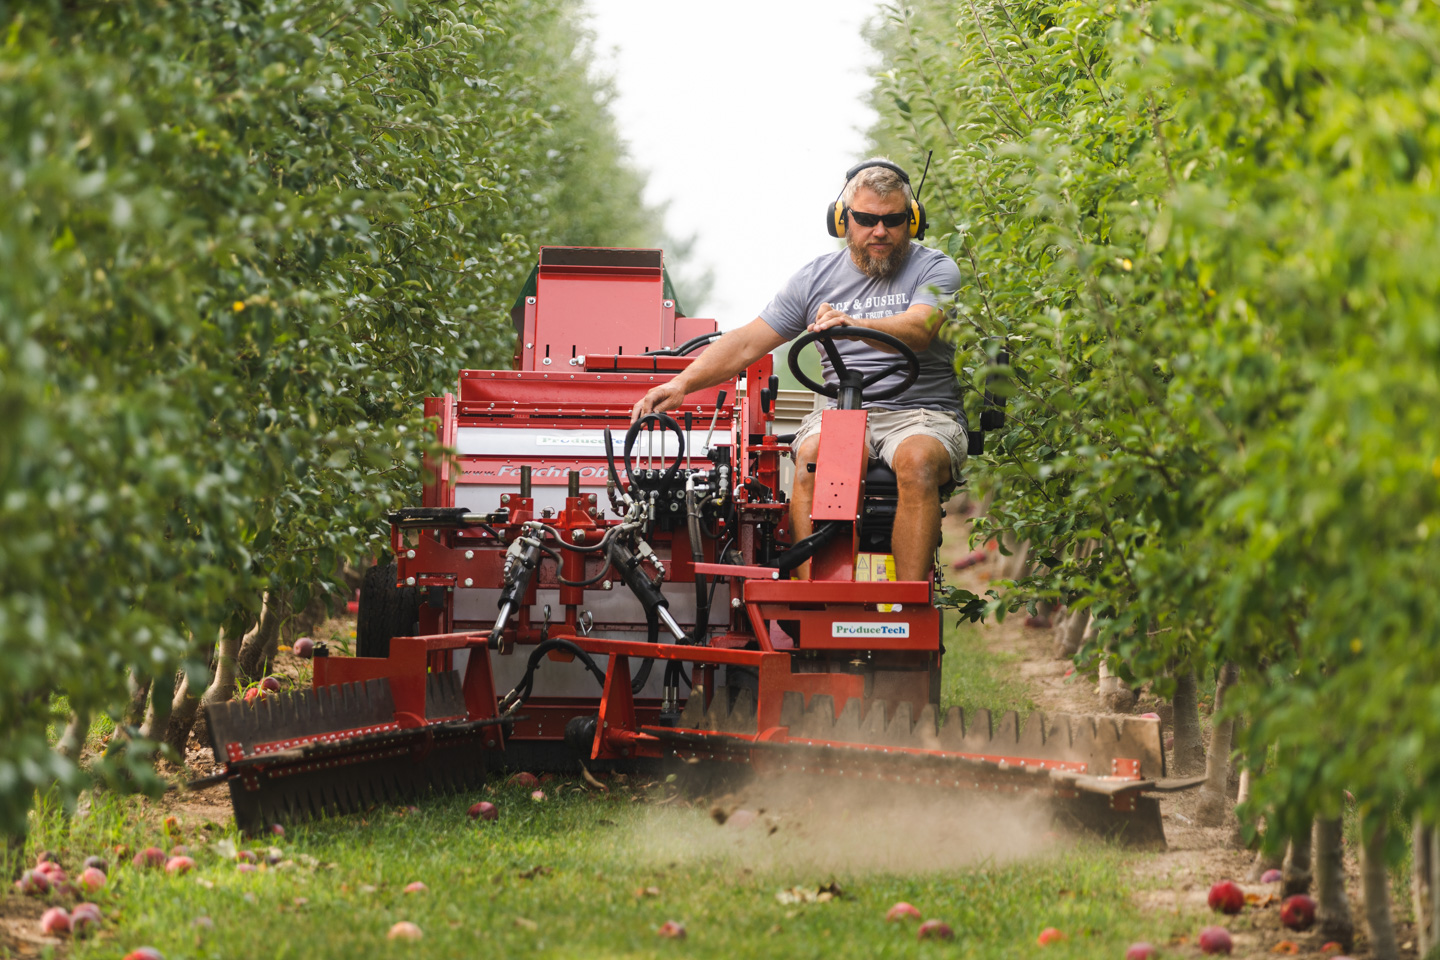 farm photographer - a farmer rides a machine that picks up fallen apples in the field